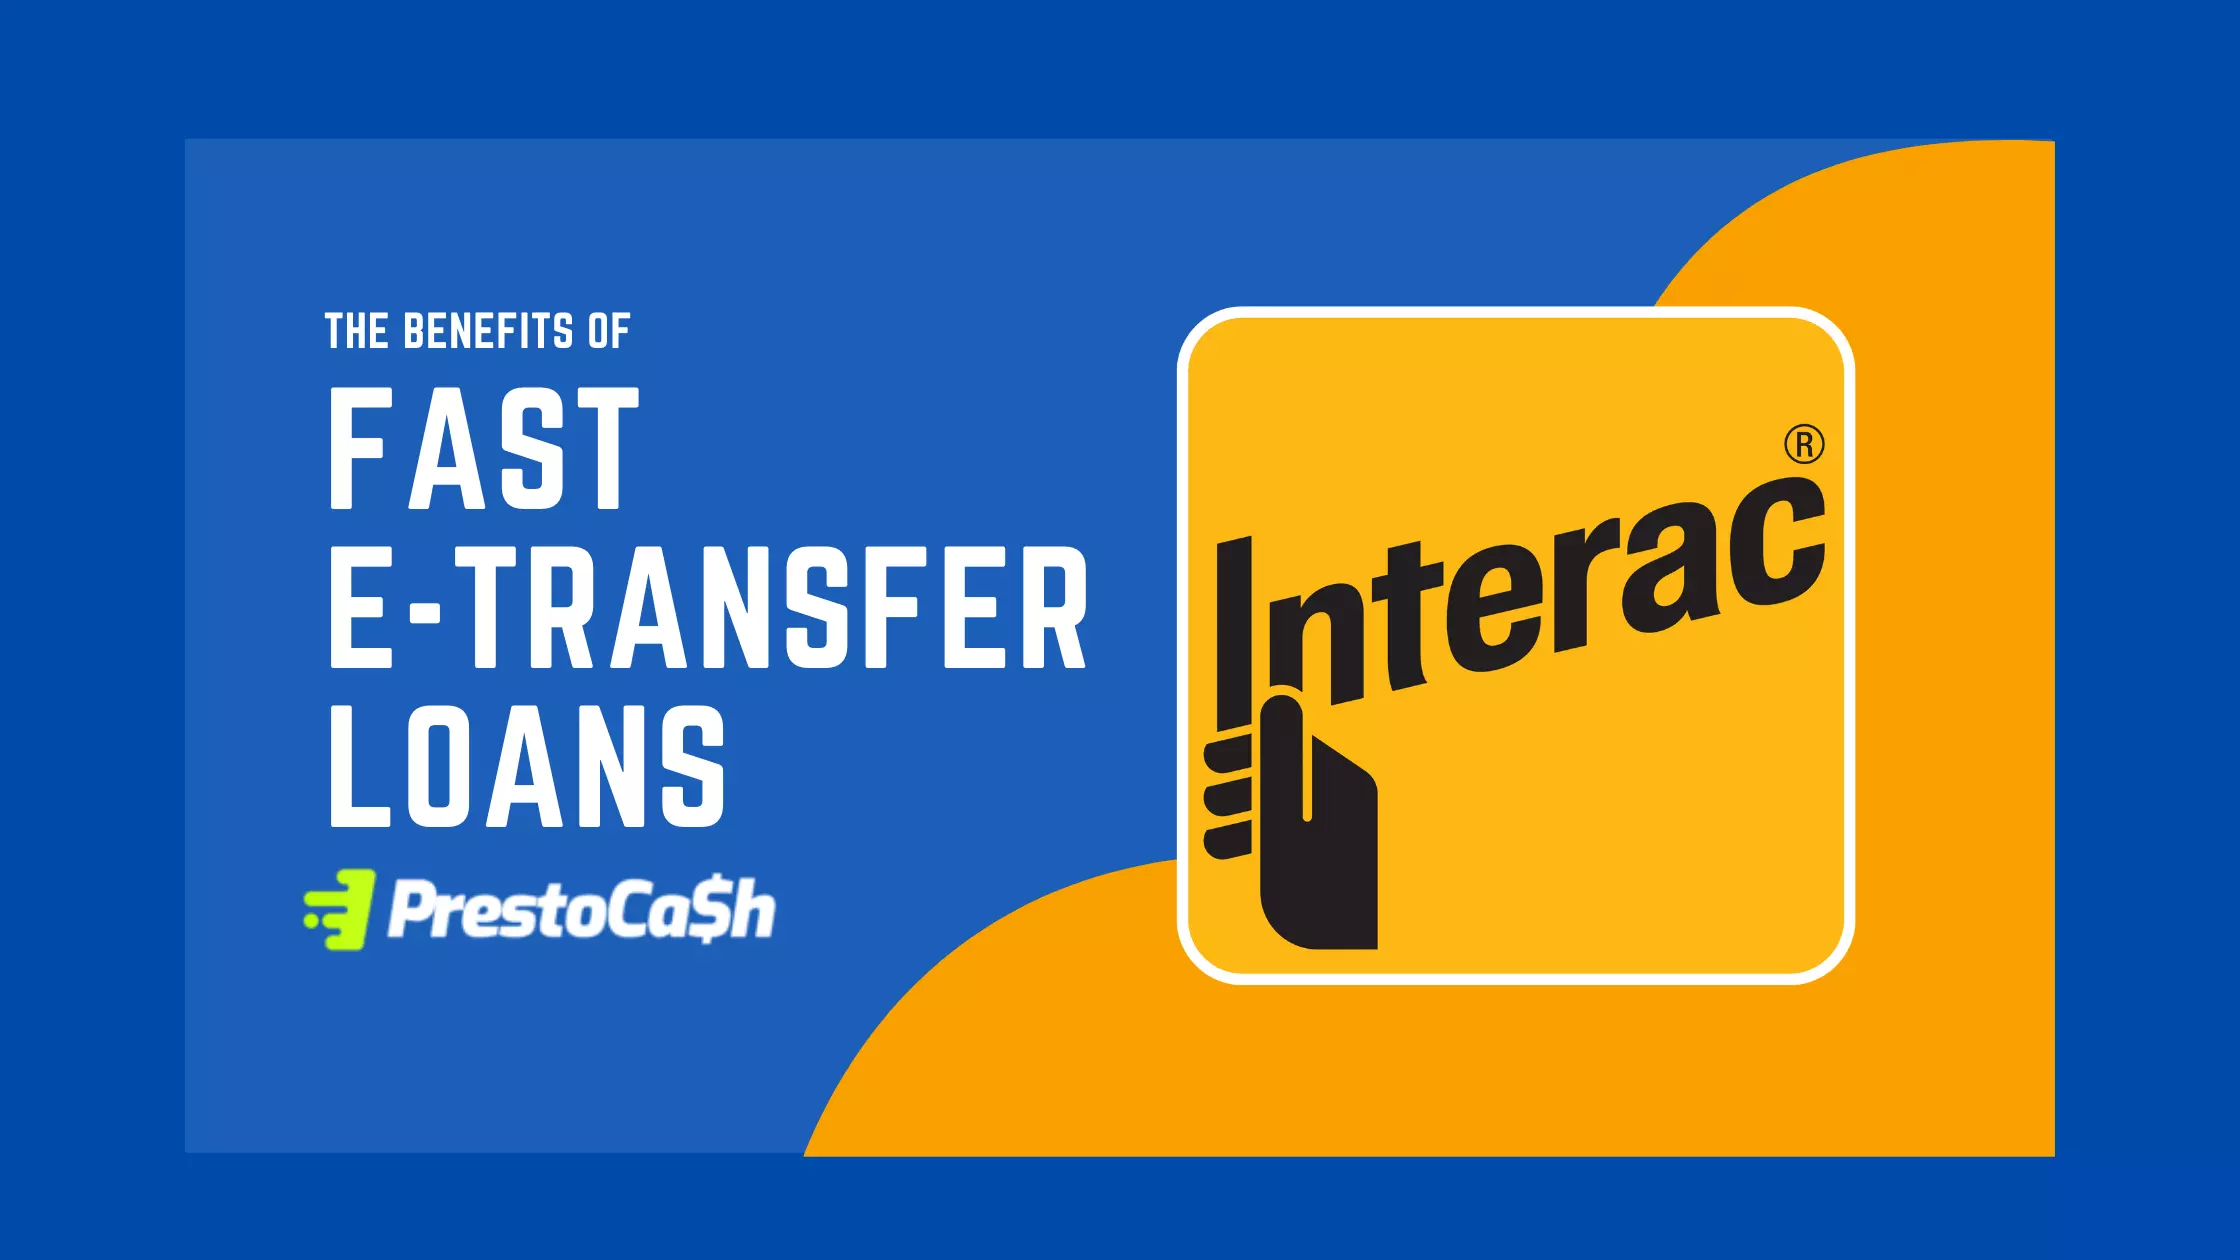 Fast e-transfer loans in canada